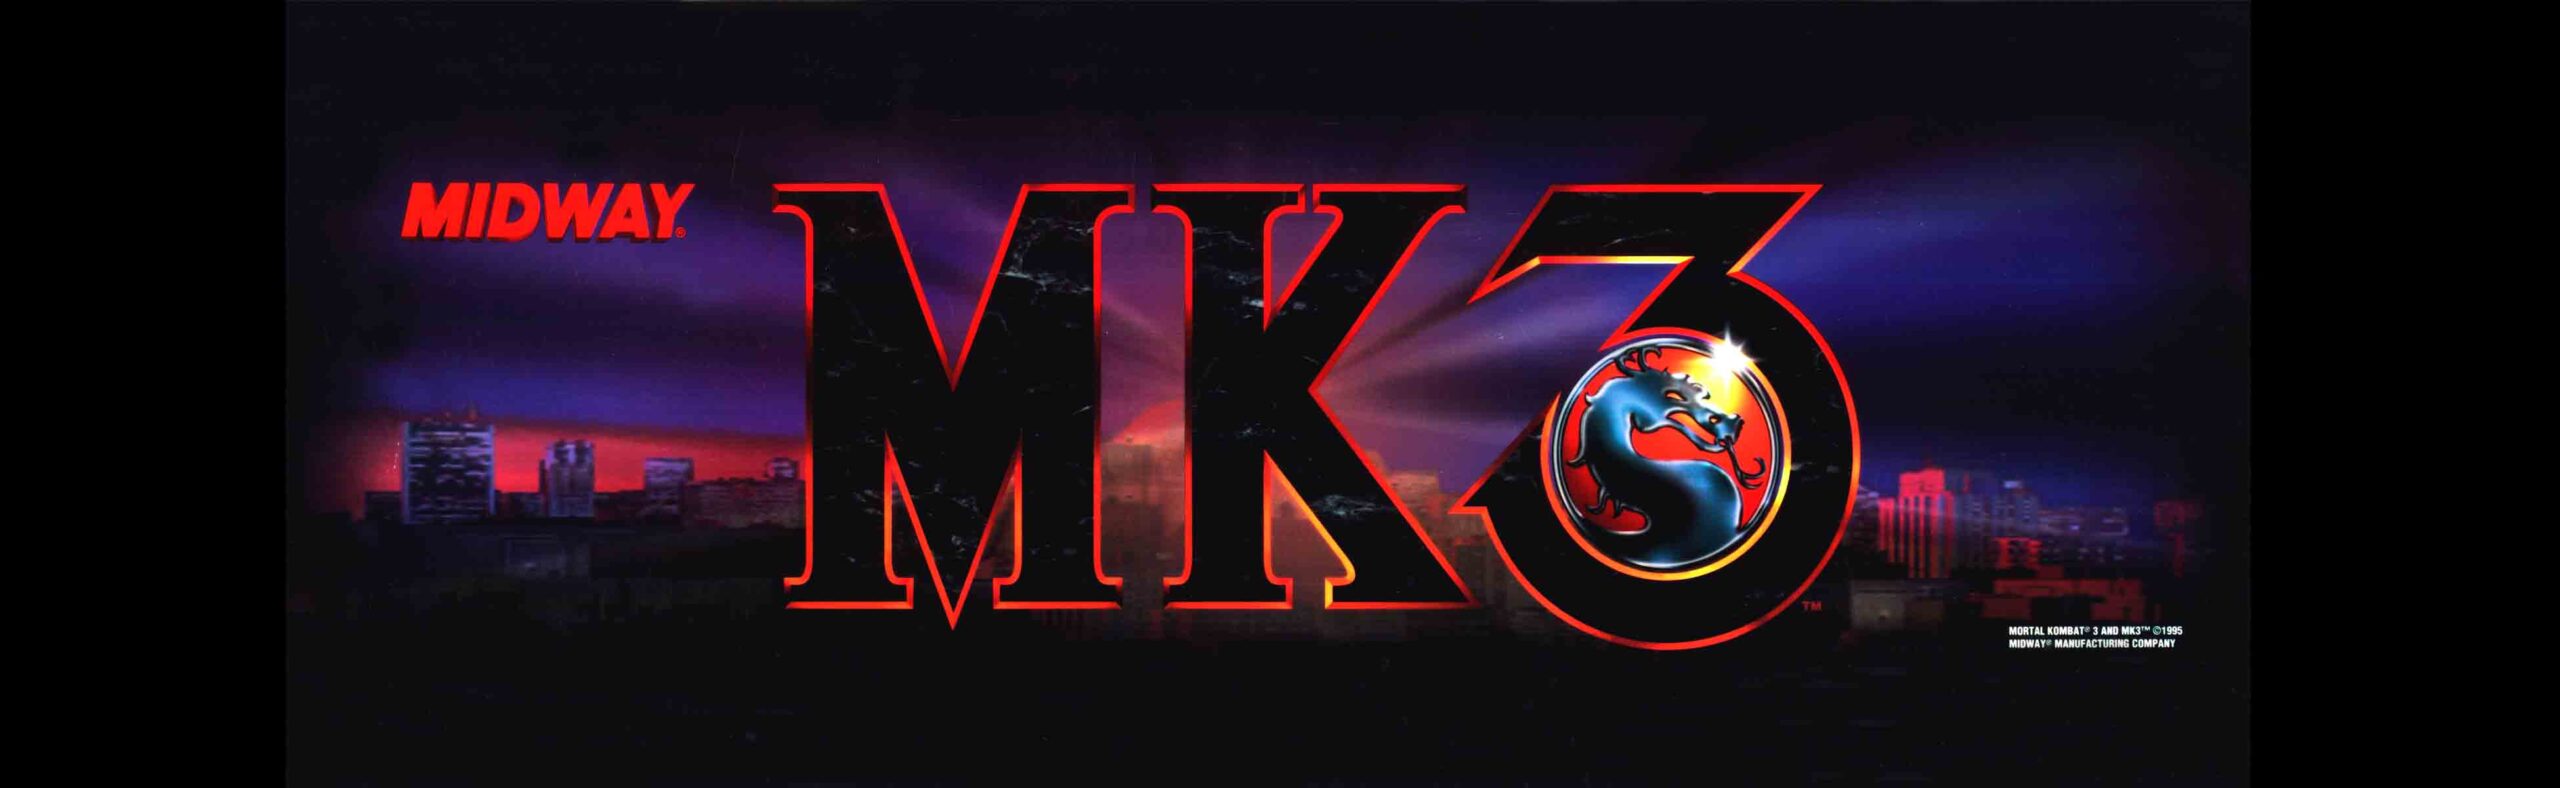 Mortal Kombat 4 Arcade Marquee 26" x 8"